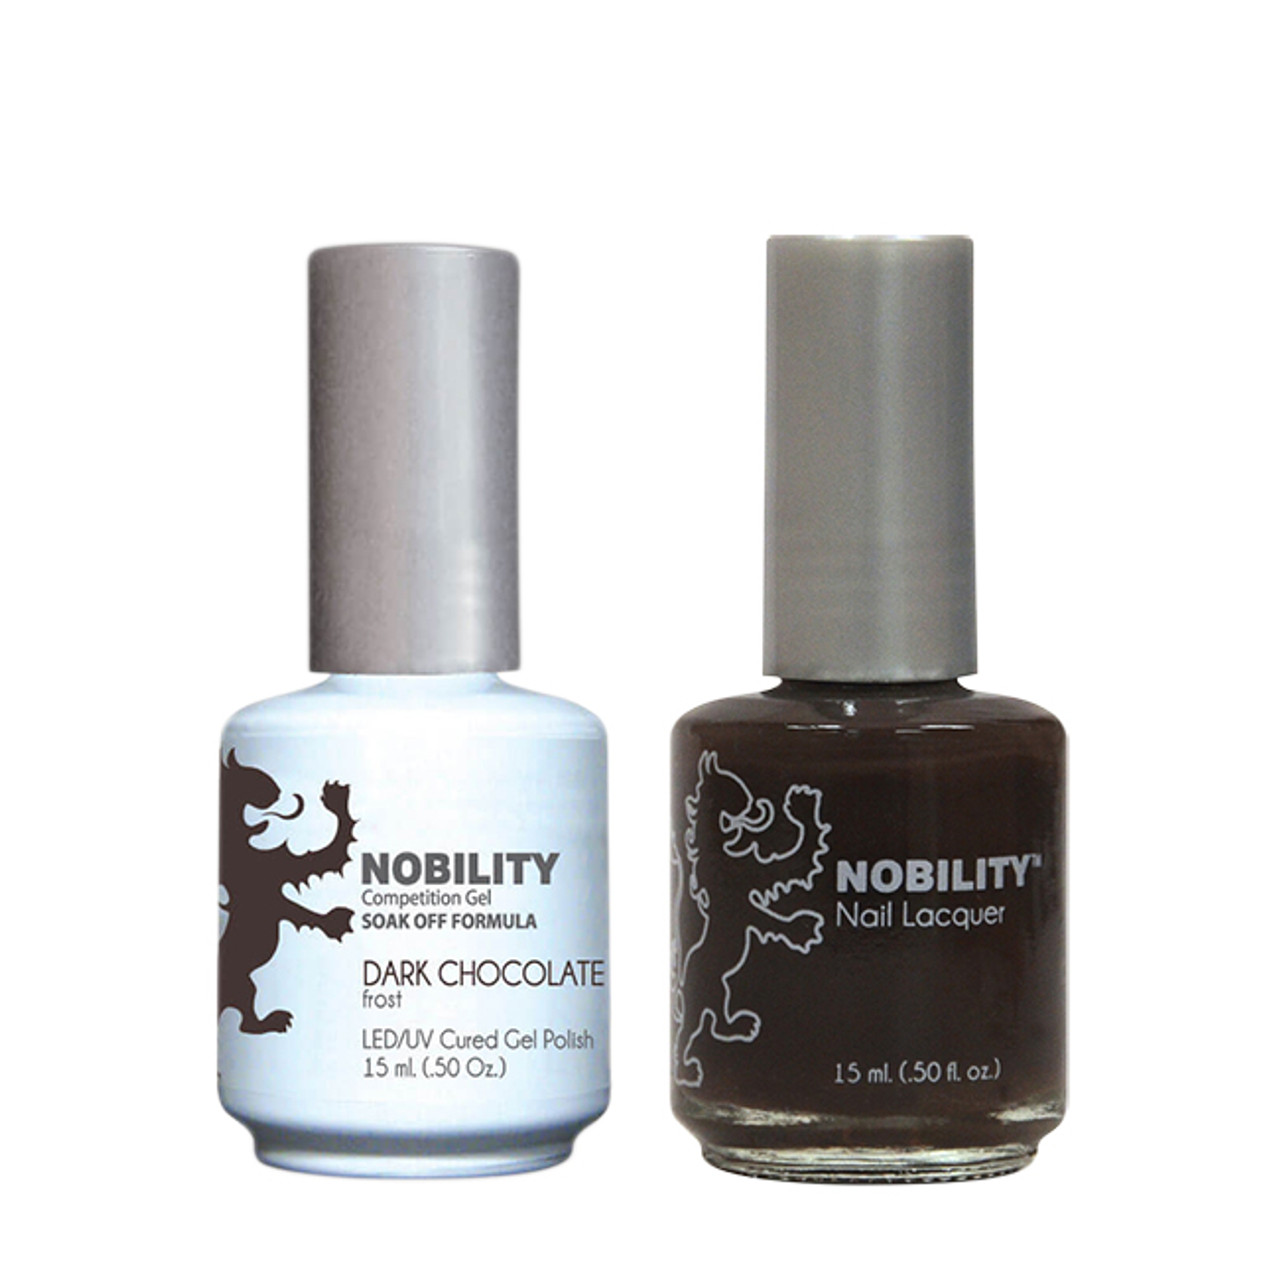 LeChat Nobility Gel Polish & Nail Lacquer Duo Set Dark Chocolate - .5 oz / 15 ml